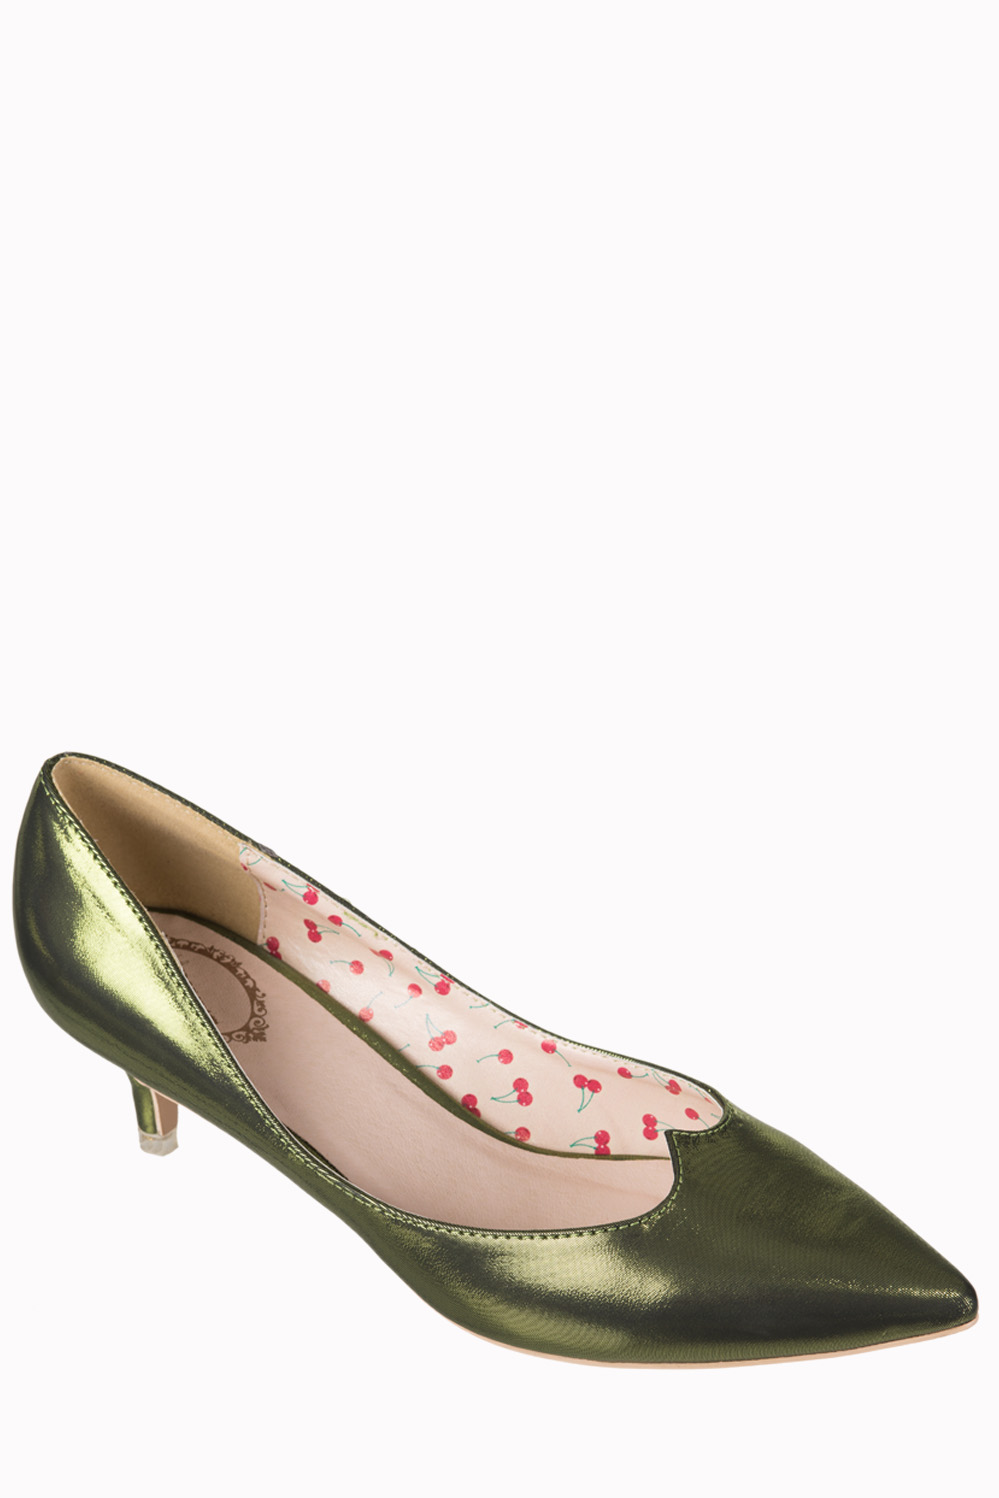 olive green kitten heels